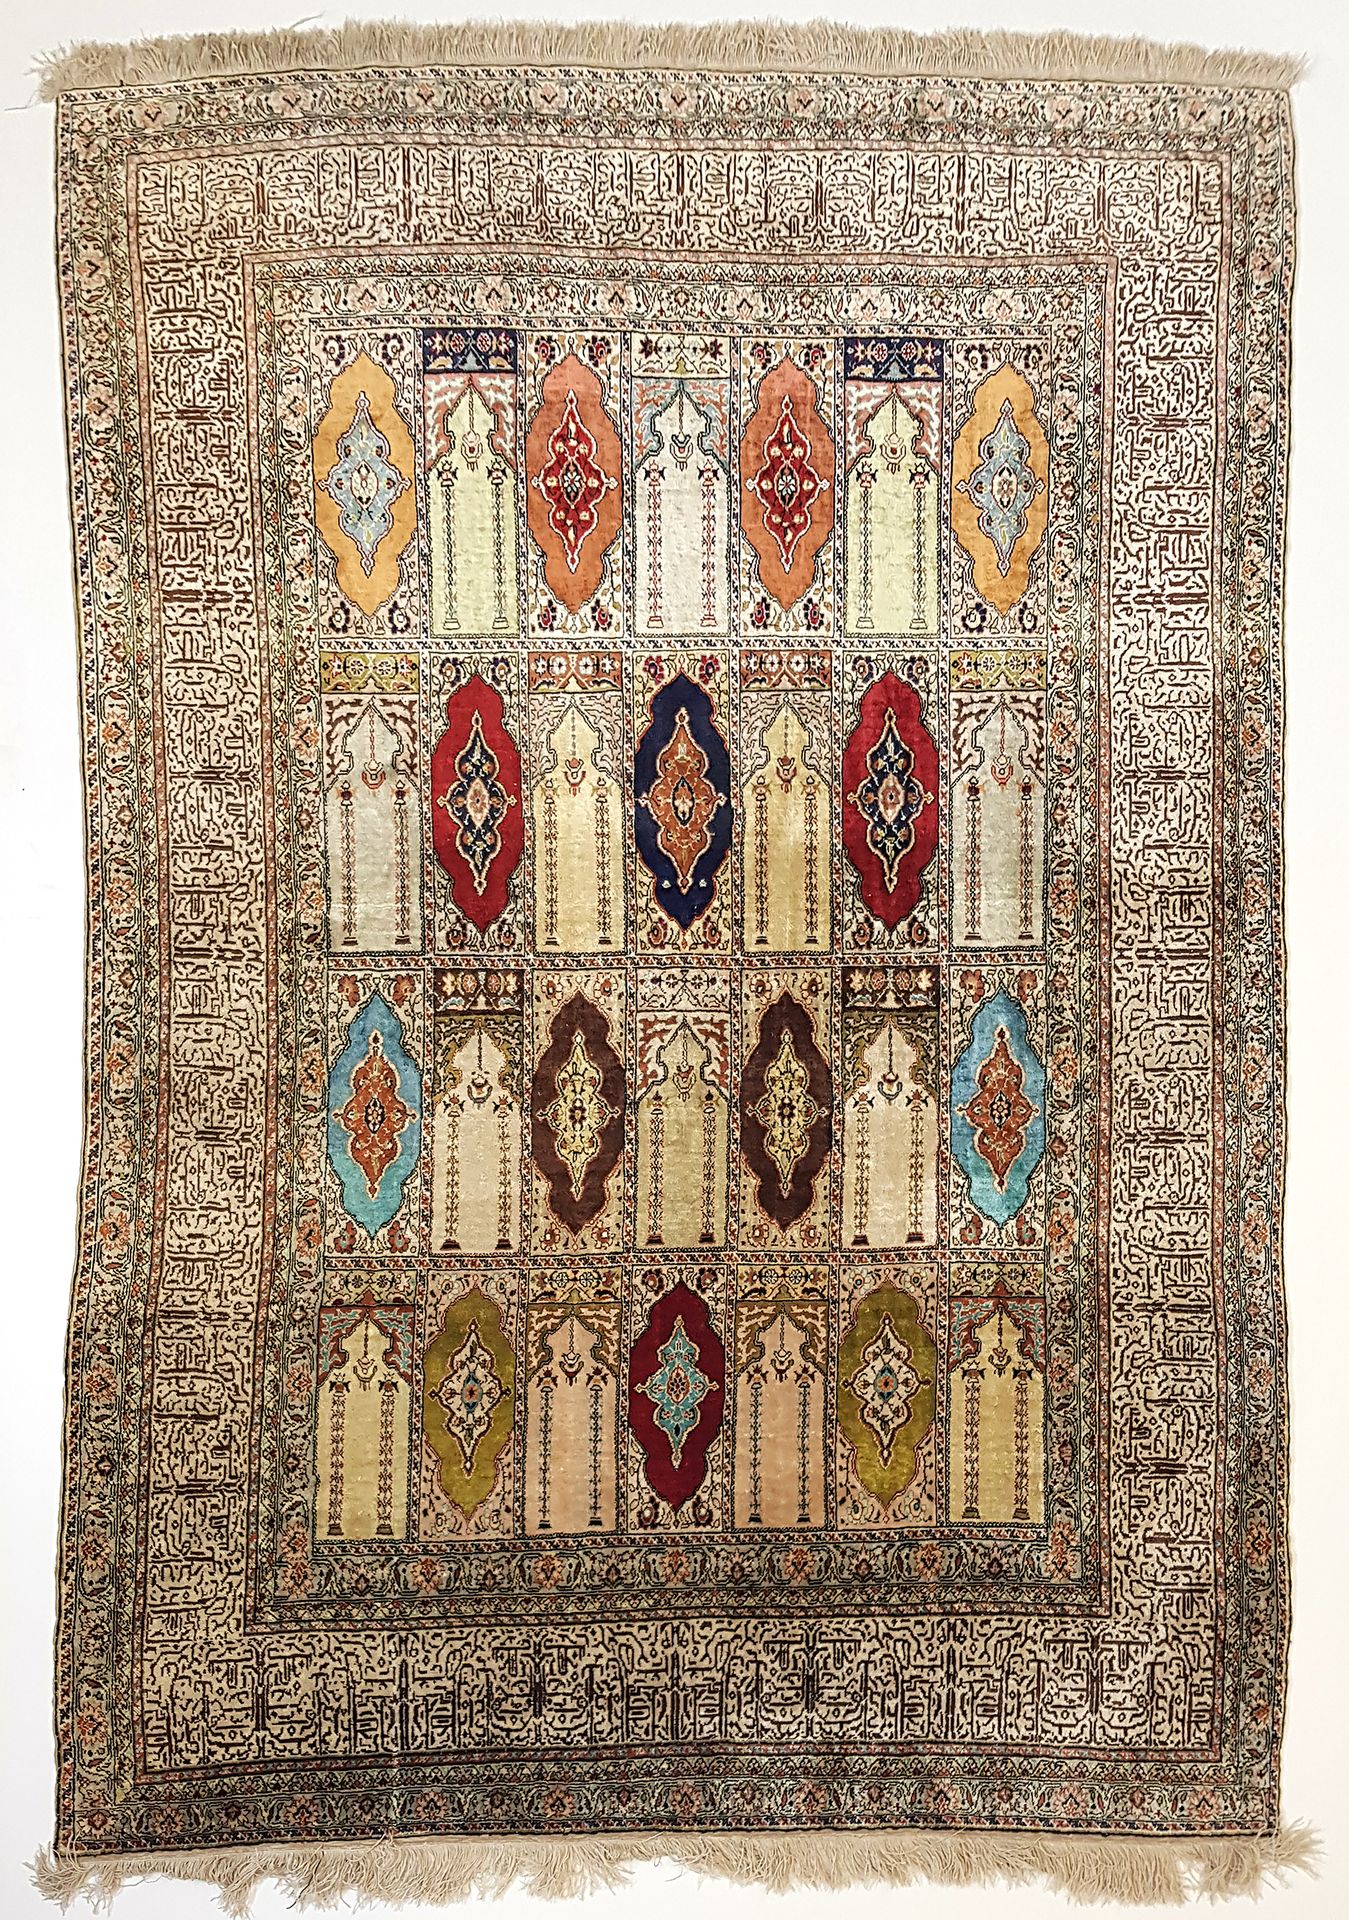 Null Fin tapis Kayseri (Turquie), vers 1975

Dimensions : 175 x 123 cm

Caractér&hellip;